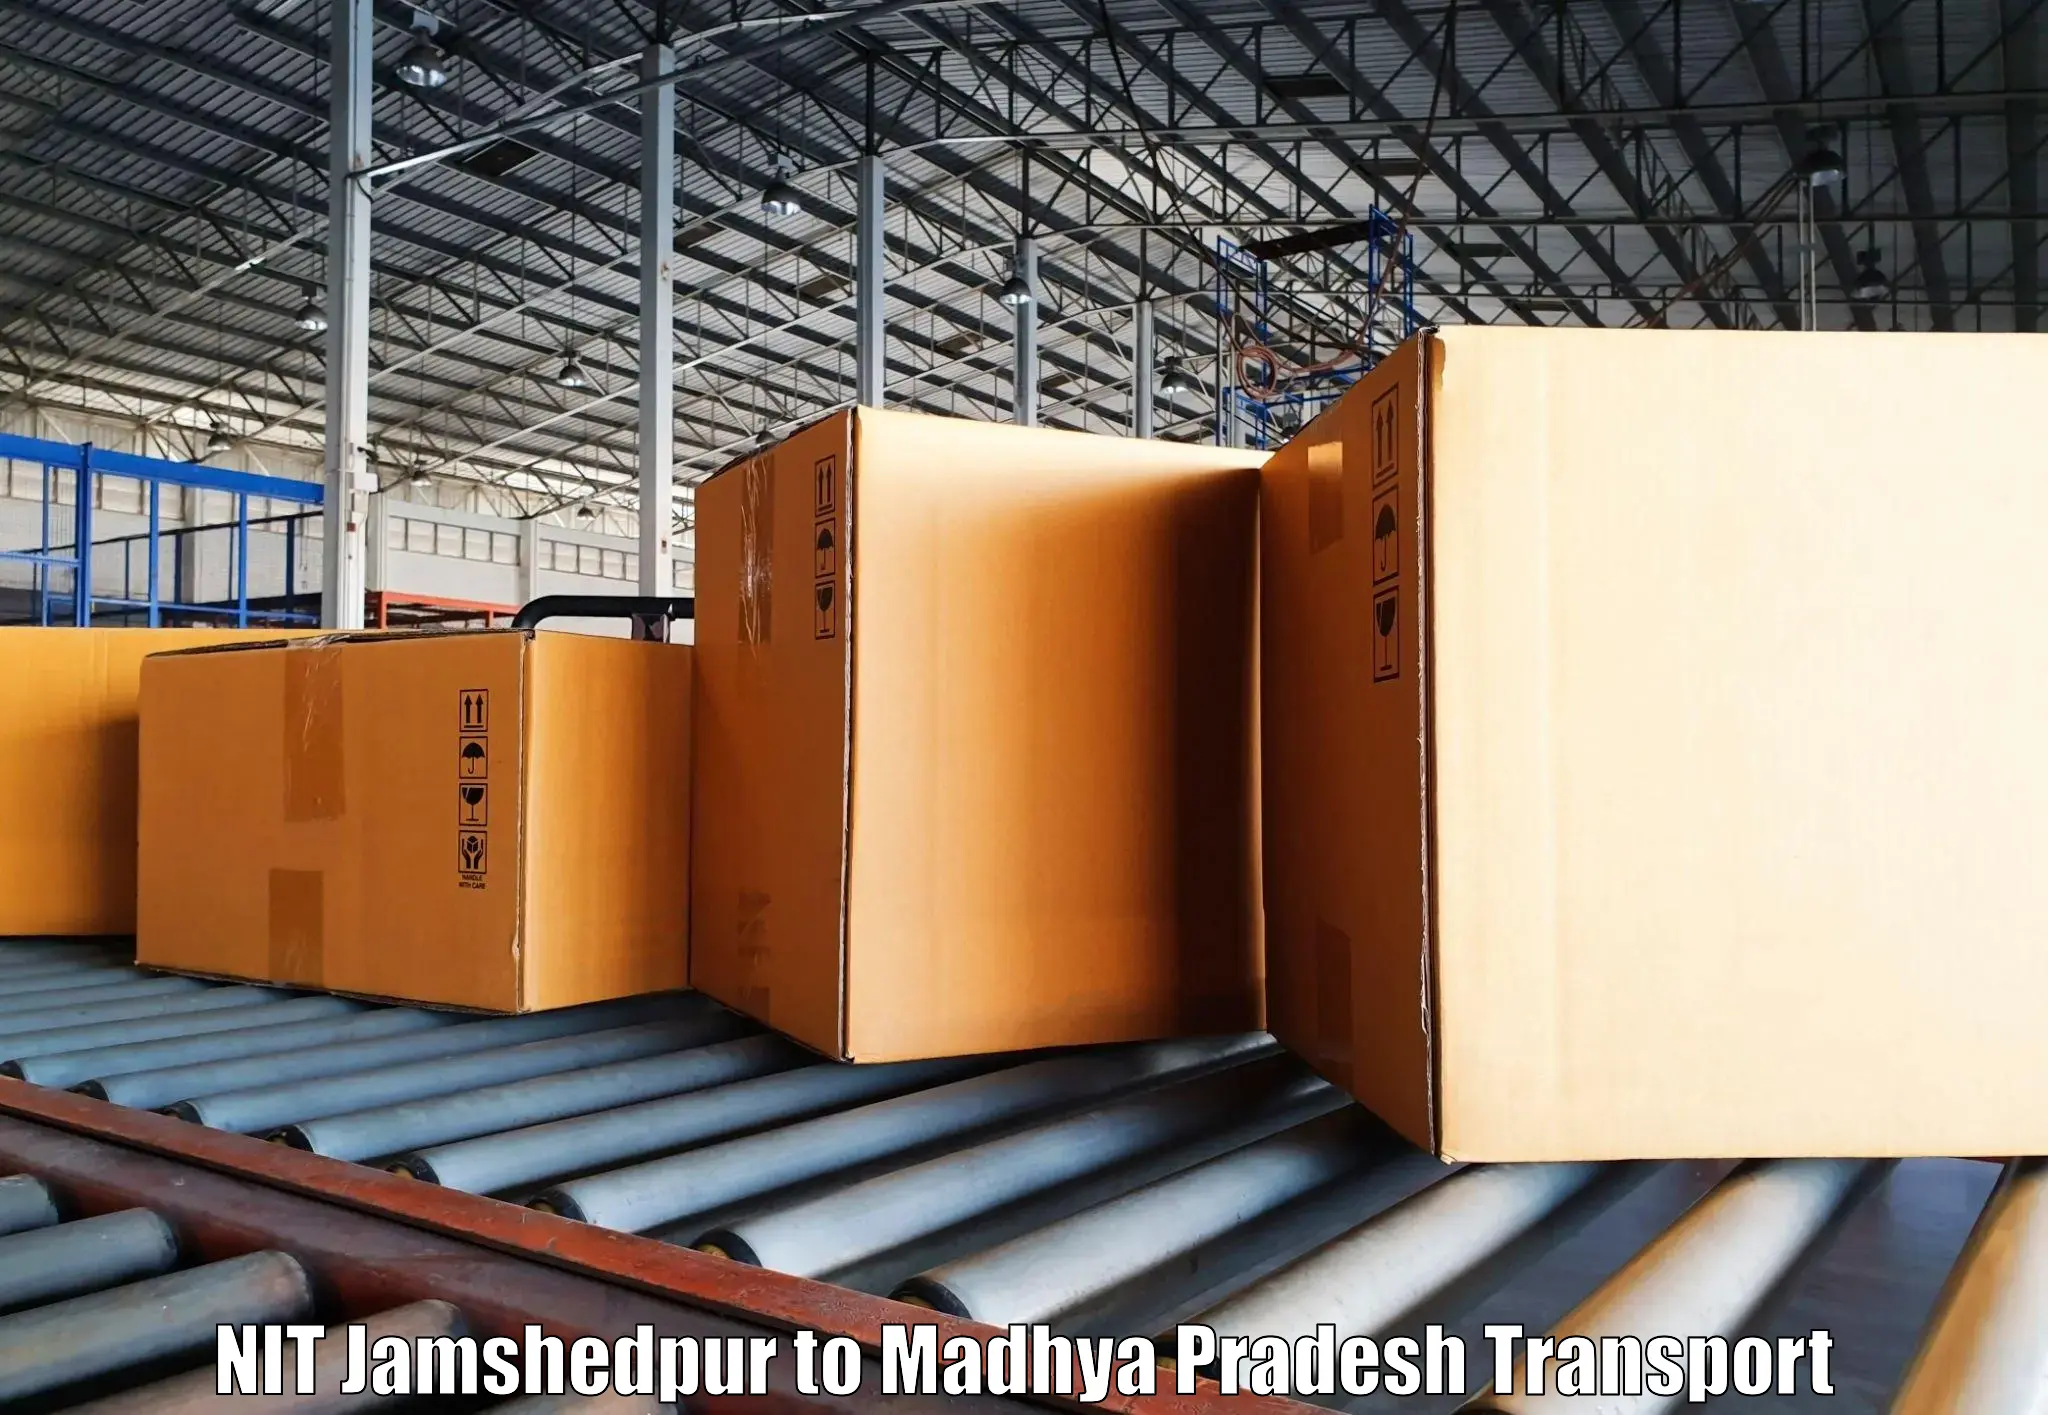 Shipping partner NIT Jamshedpur to Ashoknagar